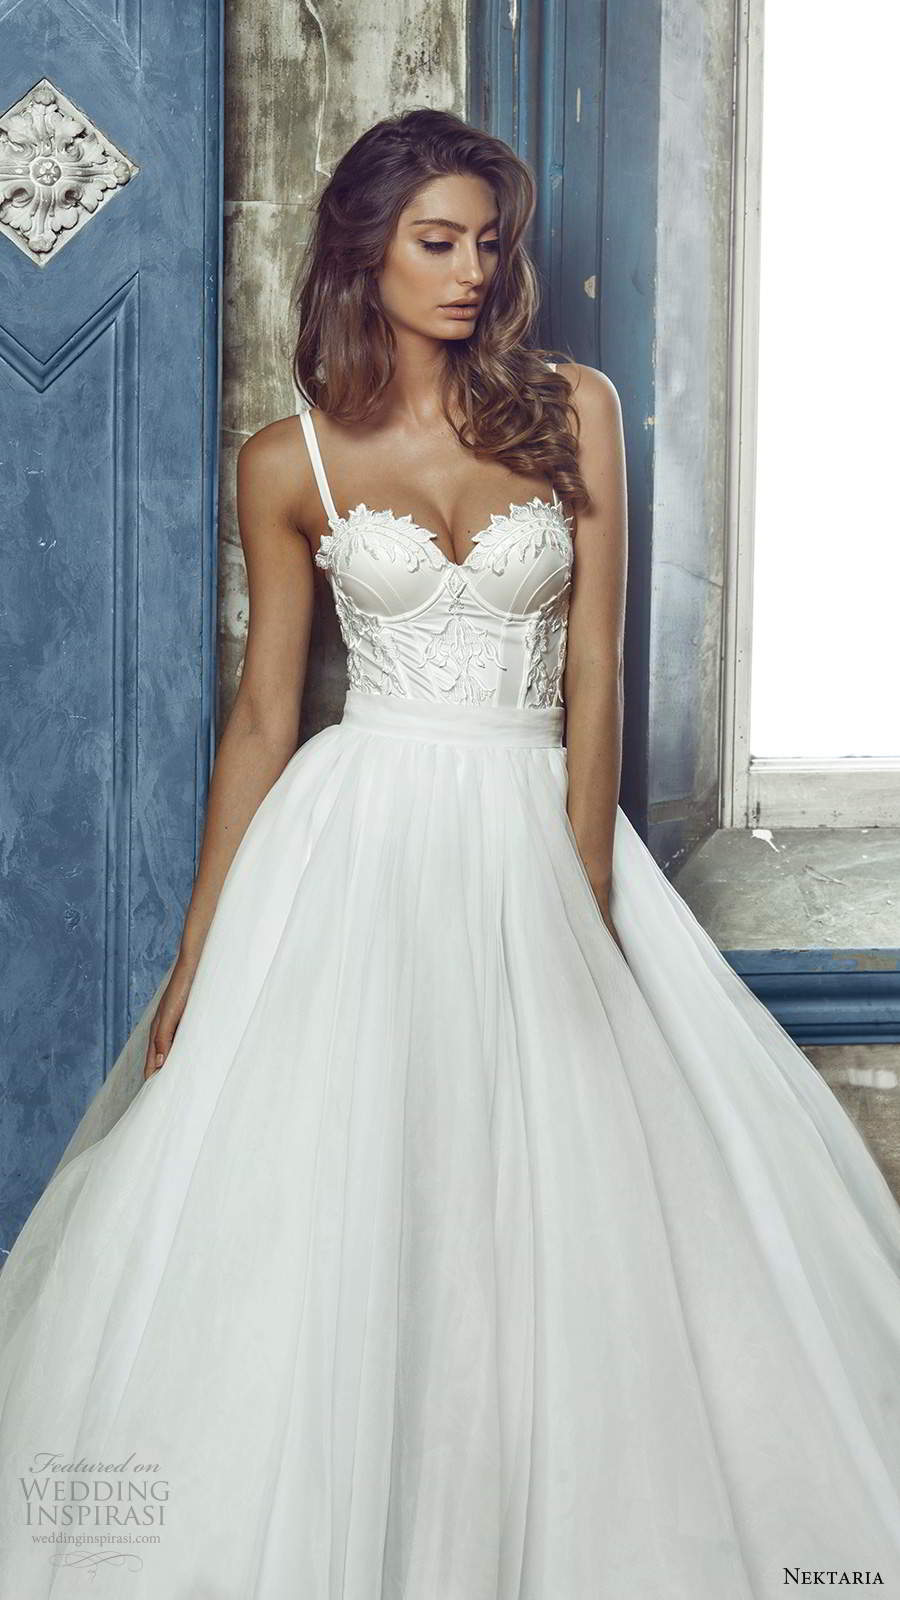 nektaria 2020 bridal sleeveless straps sweetheart neckline embellished corset bodice a line ball gown wedding dress (3) mv